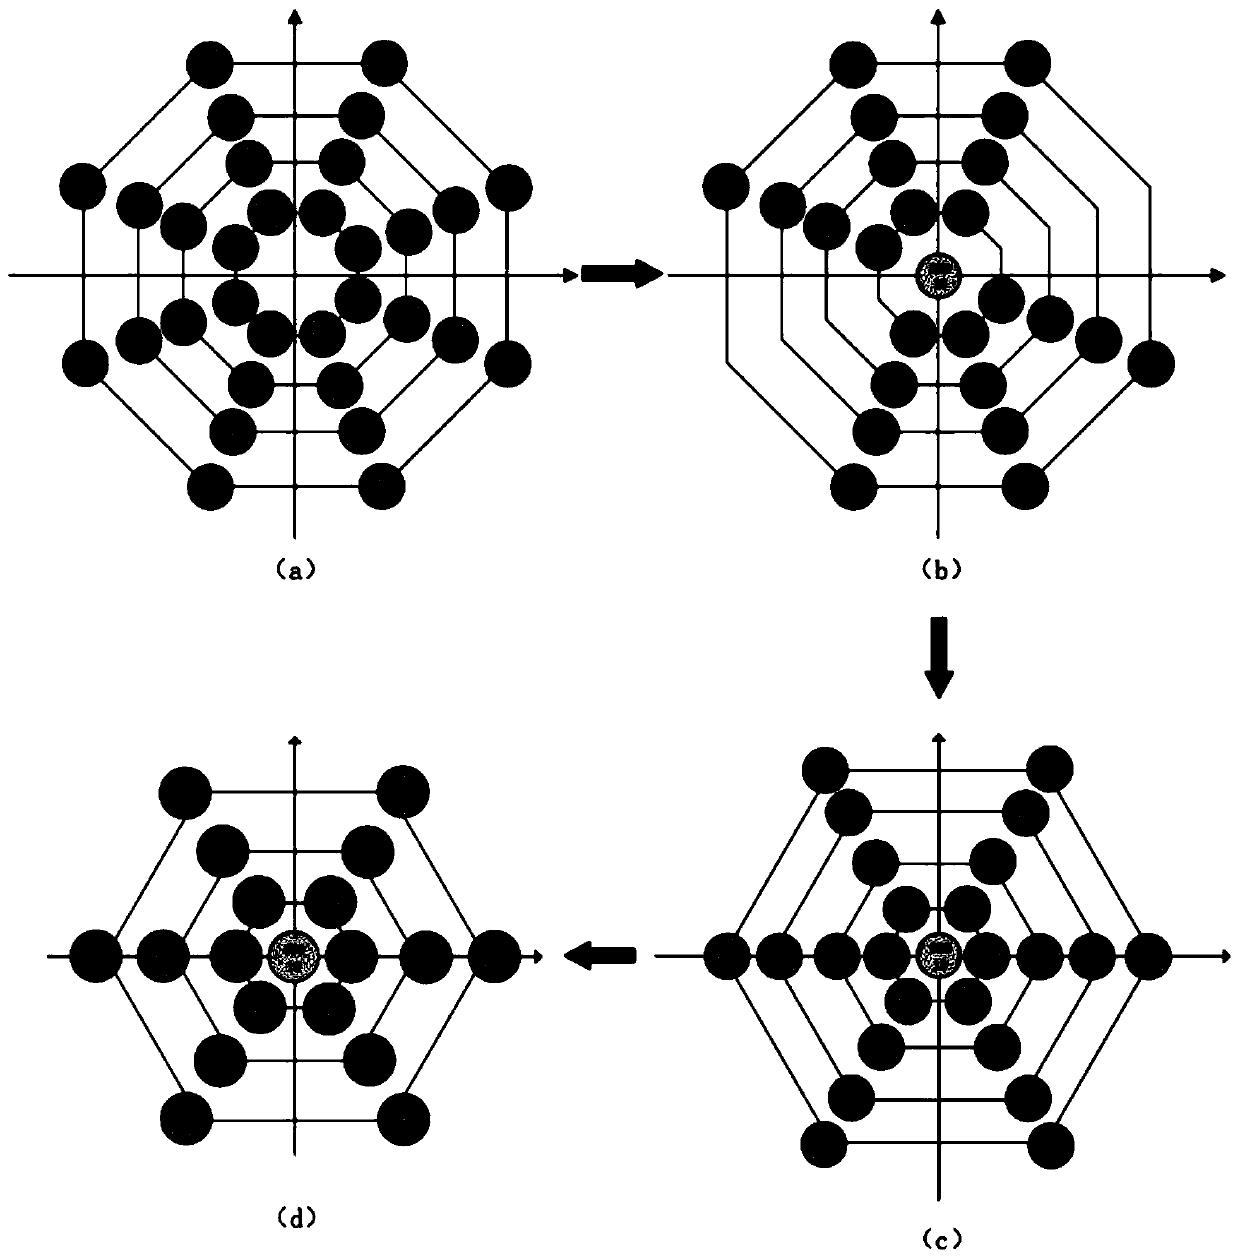 Radio-over-fiber communication method based on hexagonal constellation forming iteration